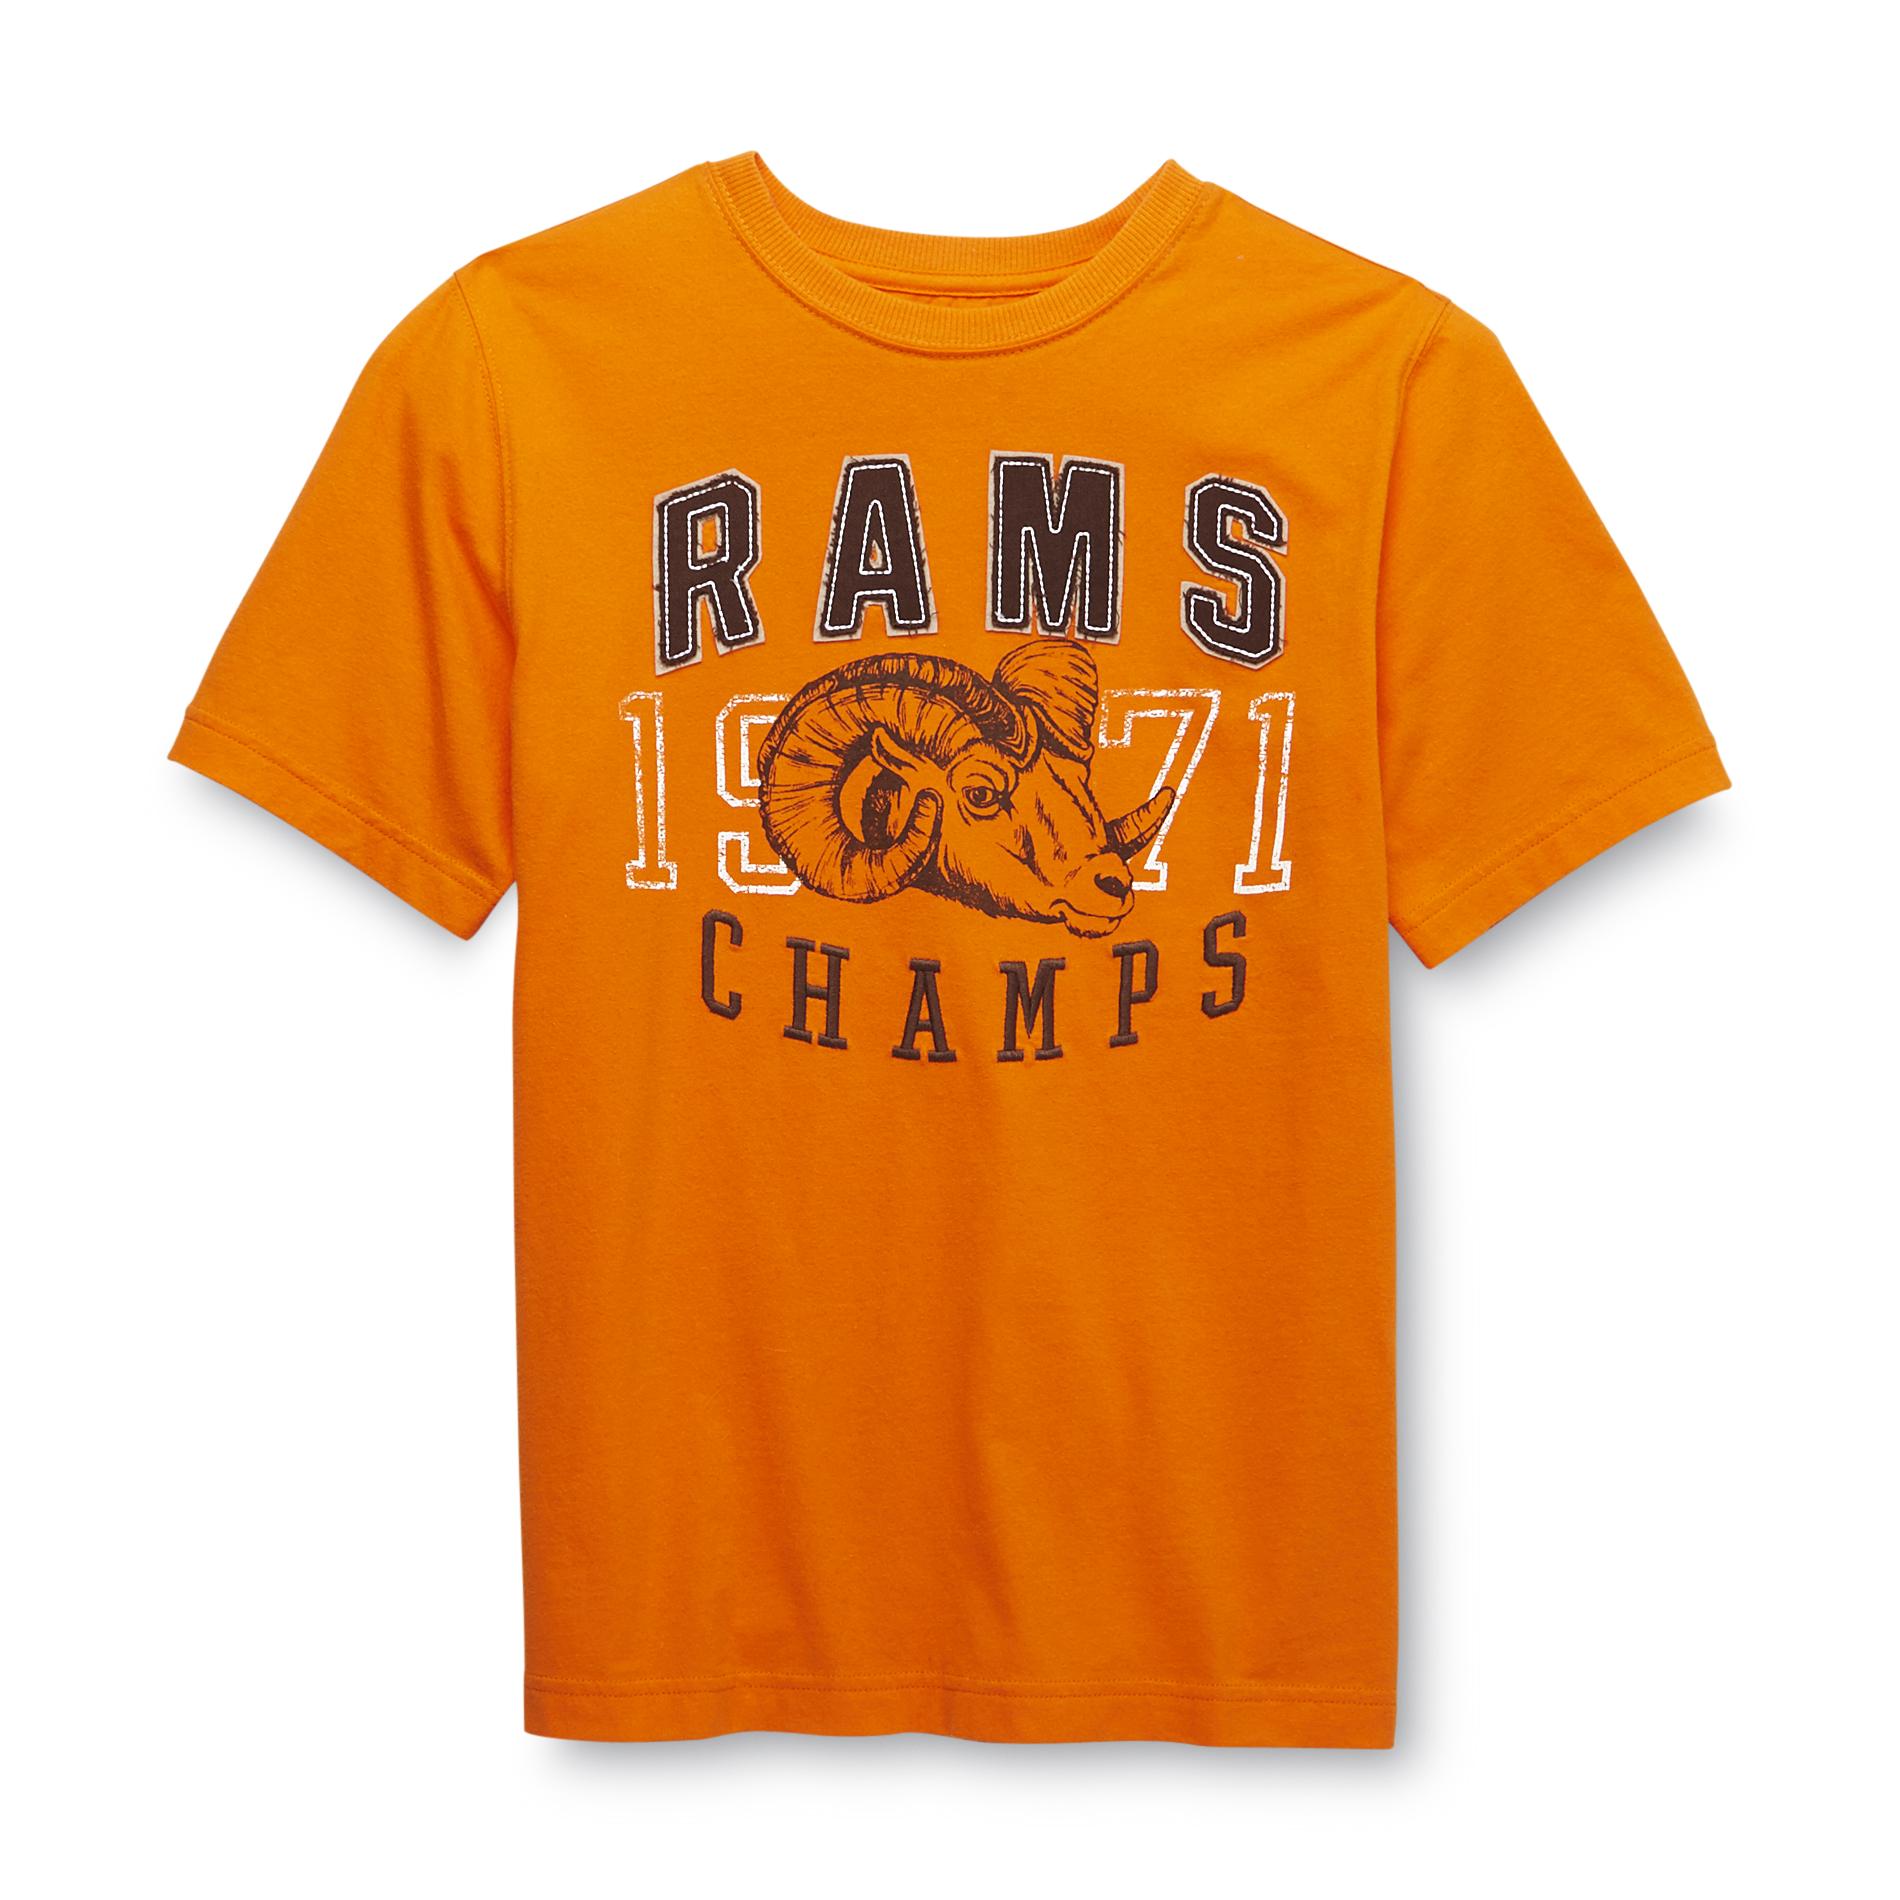 Canyon River Blues Boy's Graphic T-Shirt - Rams Champs